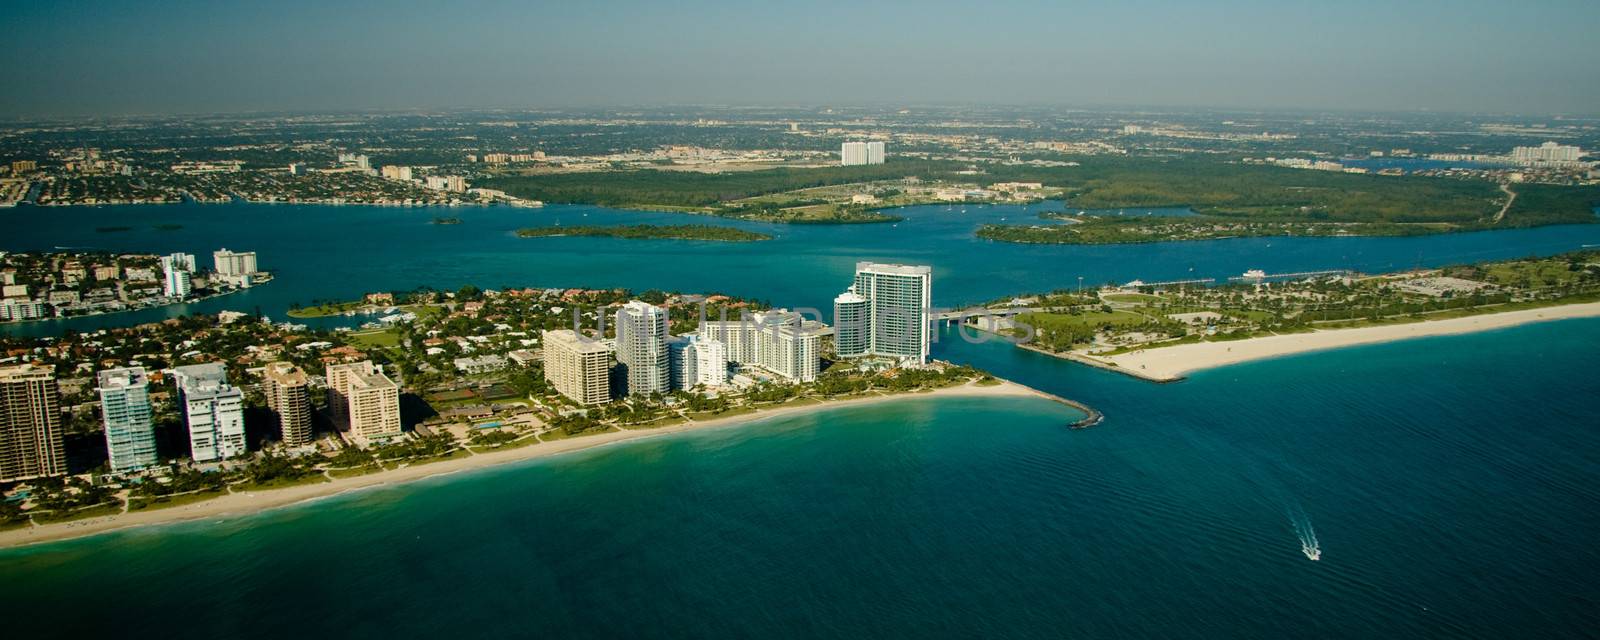 Miami seashores by CelsoDiniz